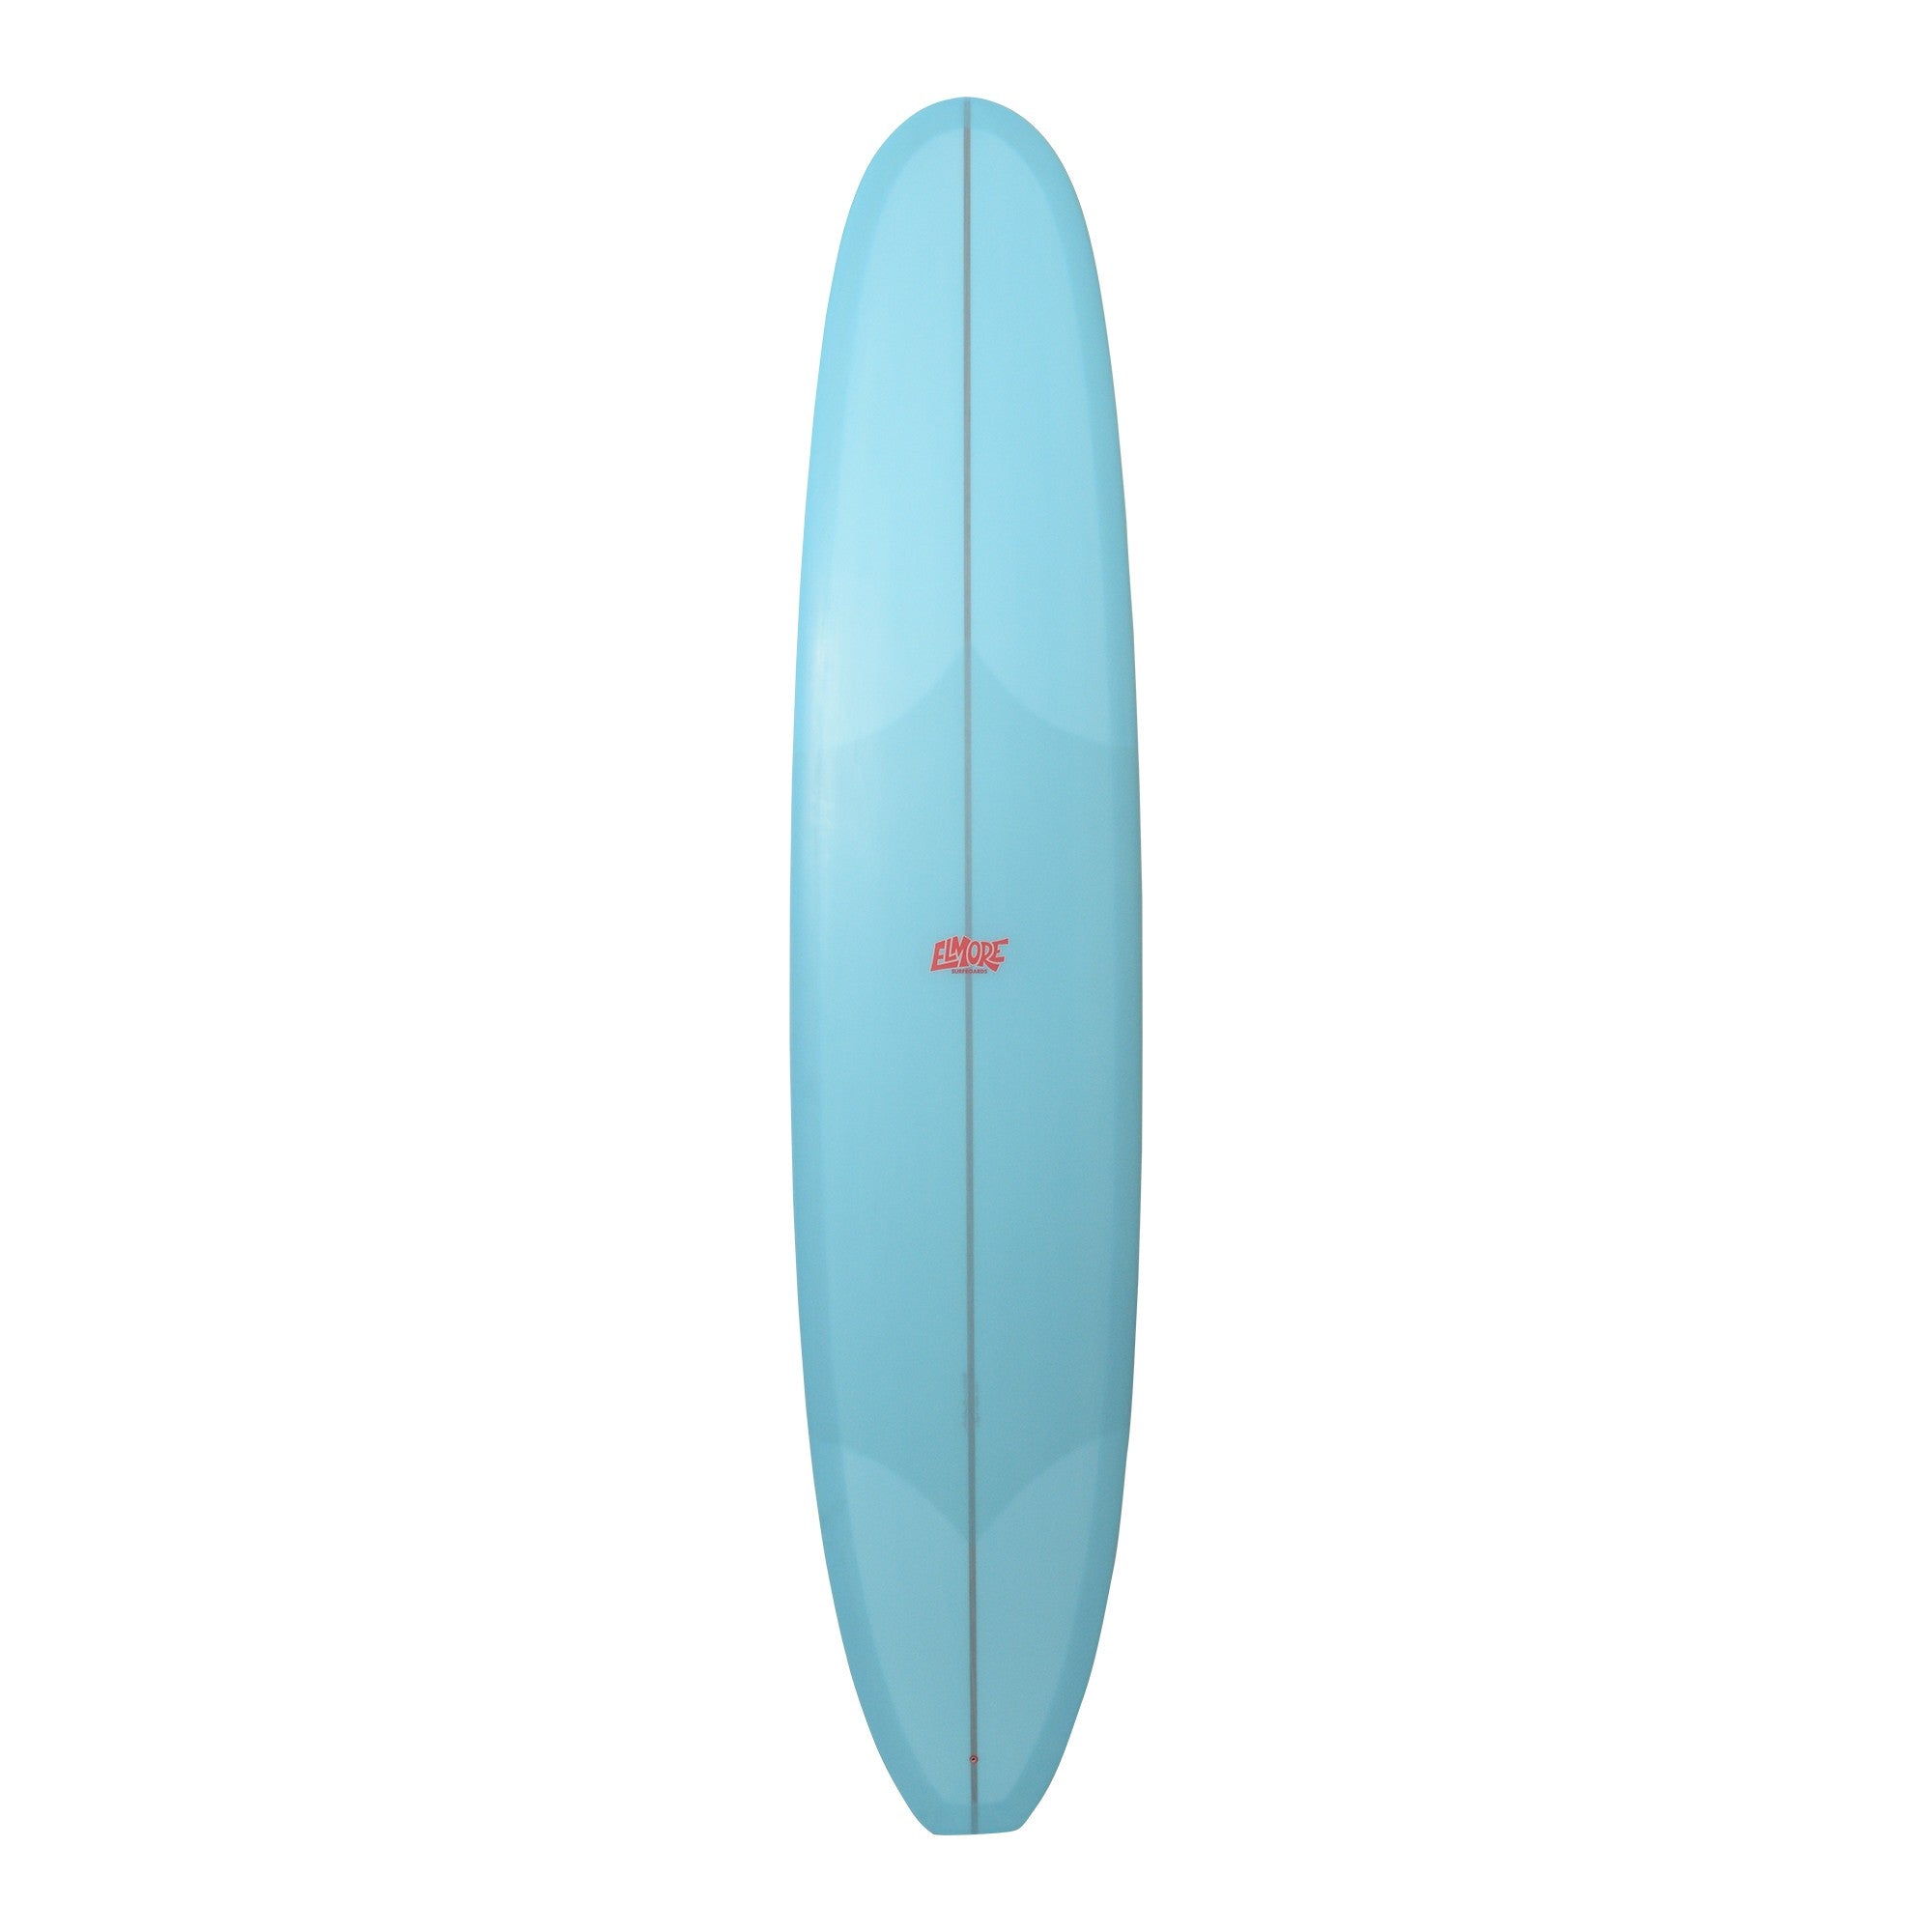 ELMORE SURFBOARDS - Sam's Club Longboard - 9'4 (PU) - Blue